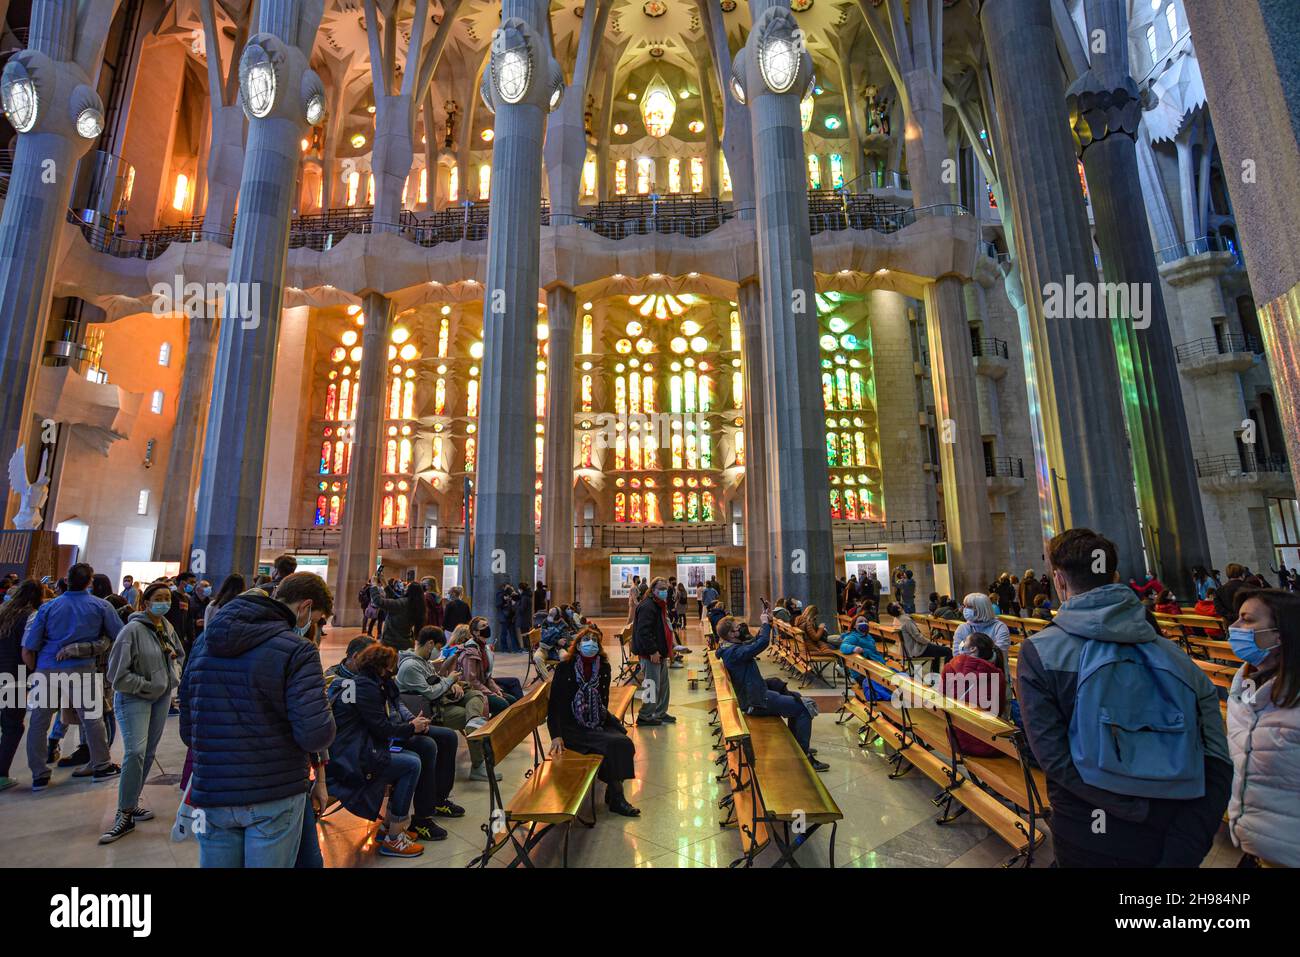 Barcelona, Spain - 22 Nov, 2021: Interior ceiling of the Basilica Sagrada Familia, Barcelona, Catalonia, Spain Stock Photo